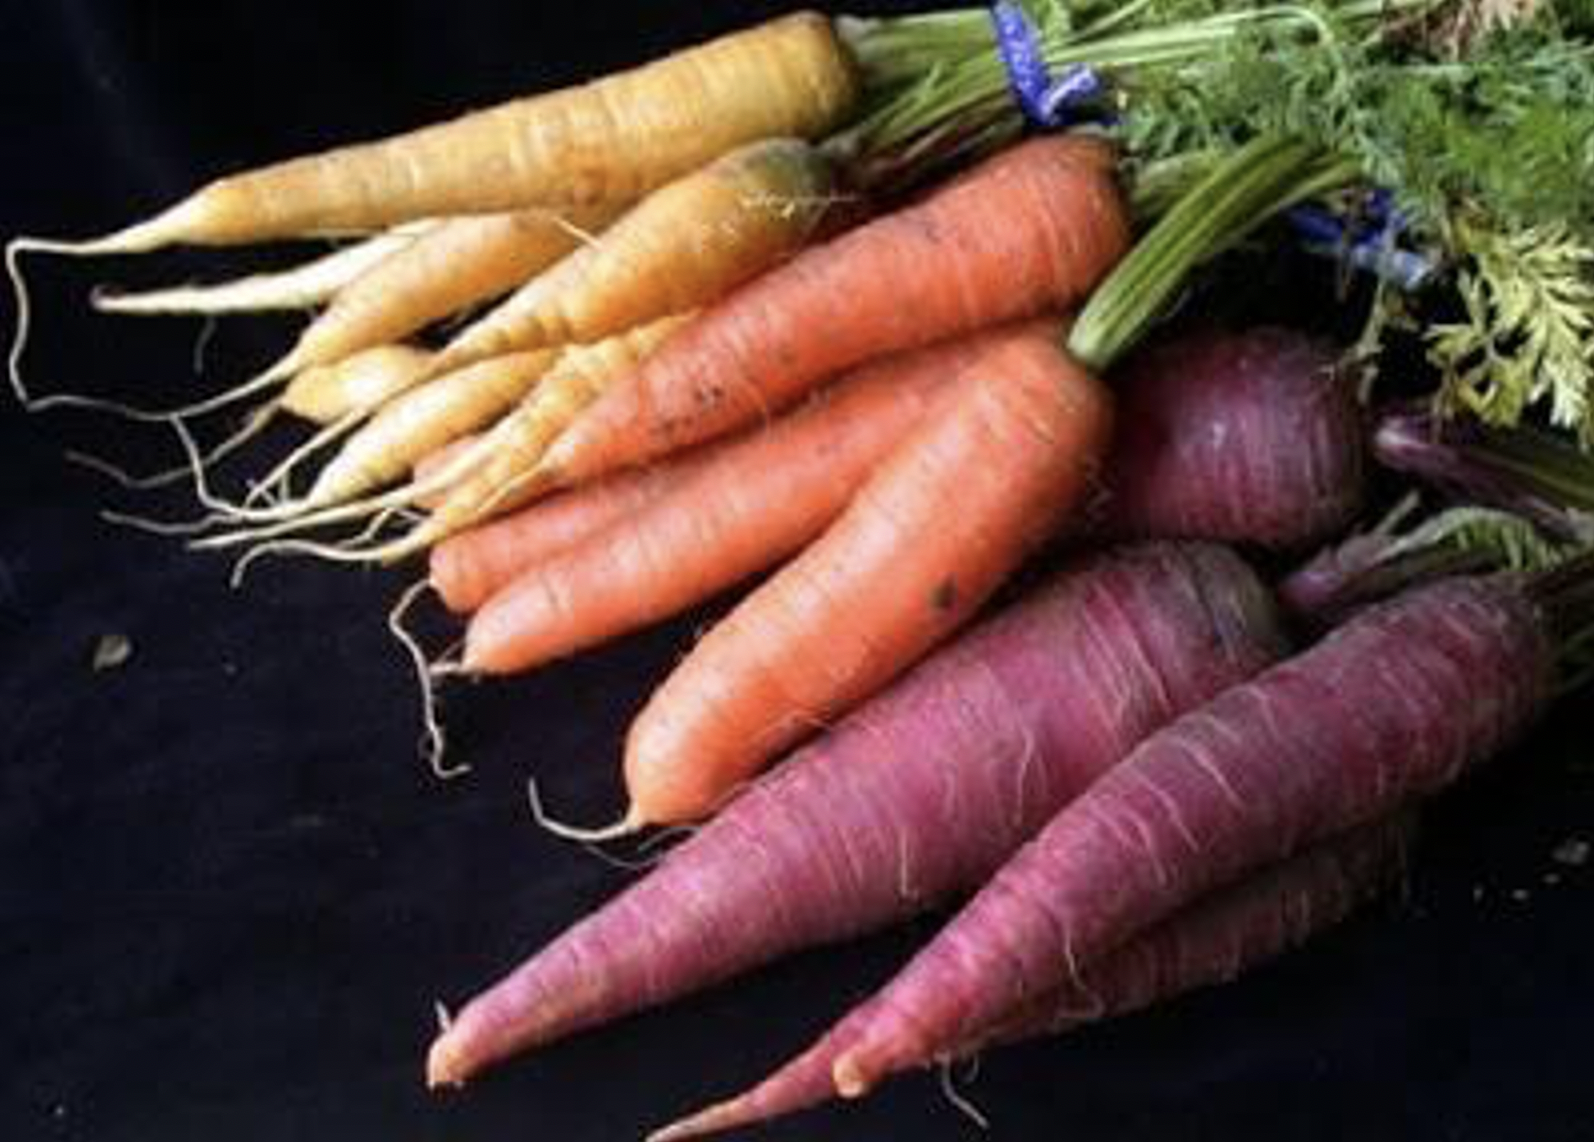 Bundle of rainbow carrots